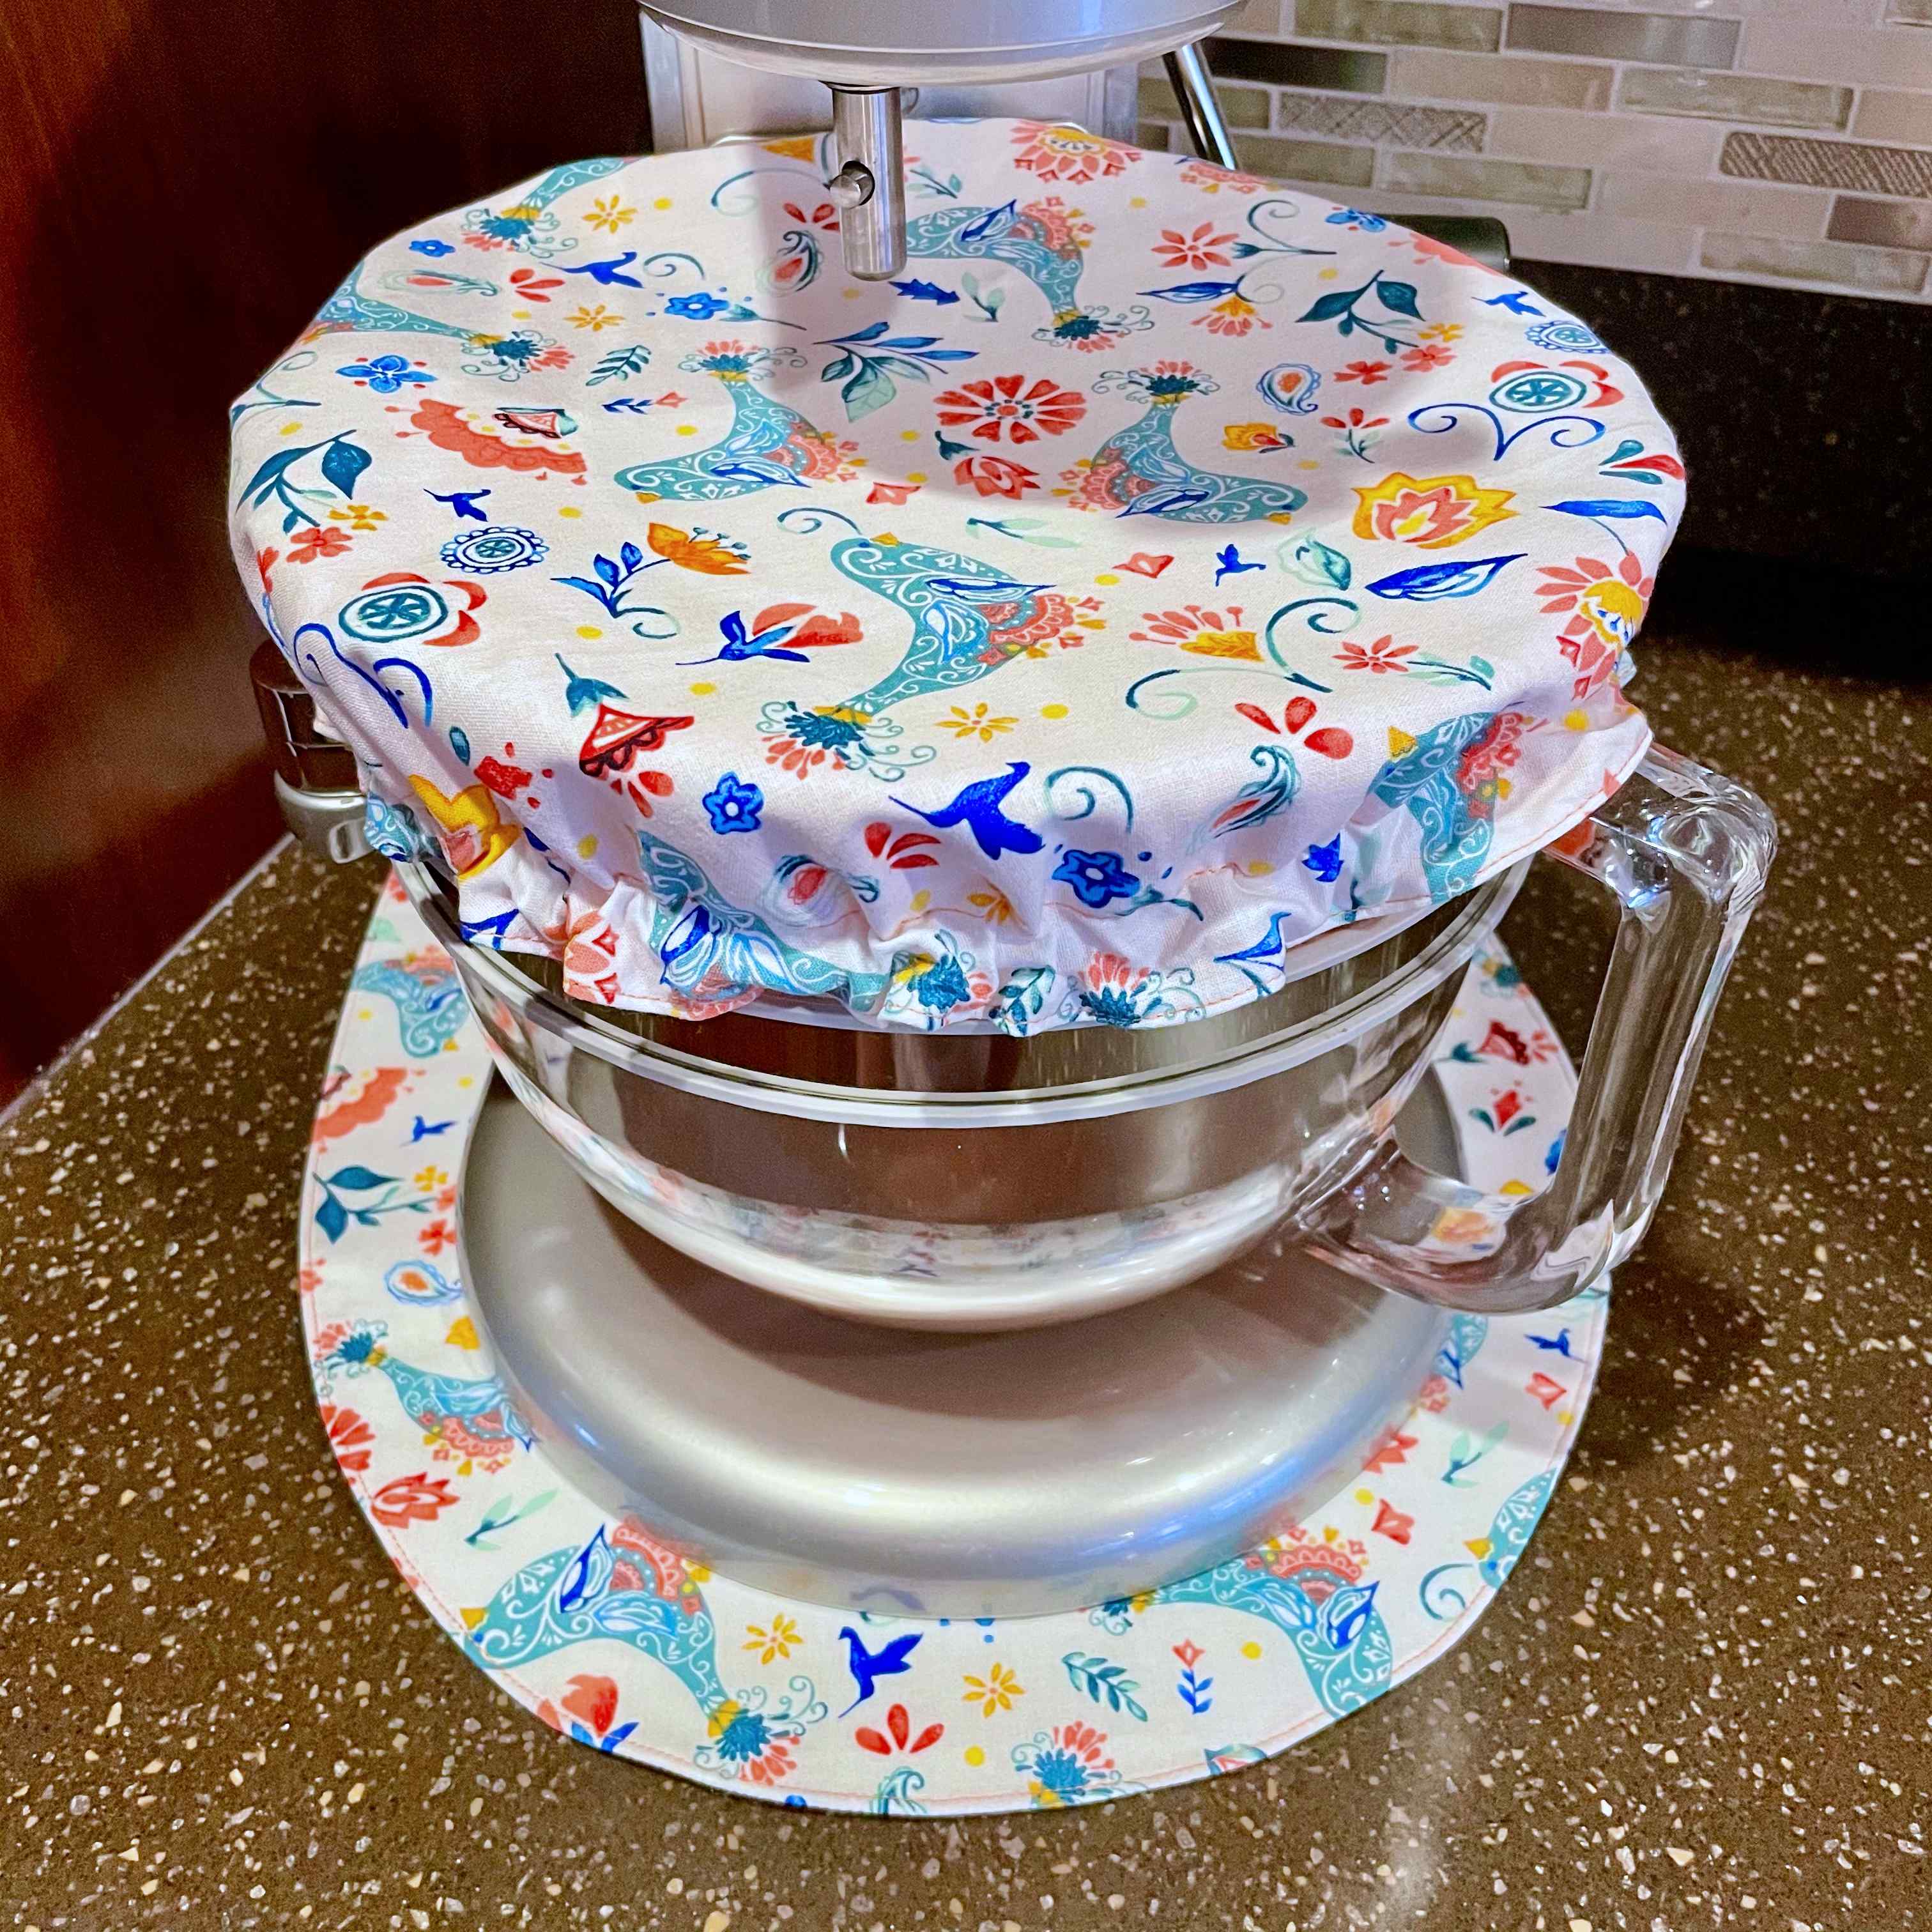 Triple Layered Confetti Cake Recipe | Ree Drummond | Food Network